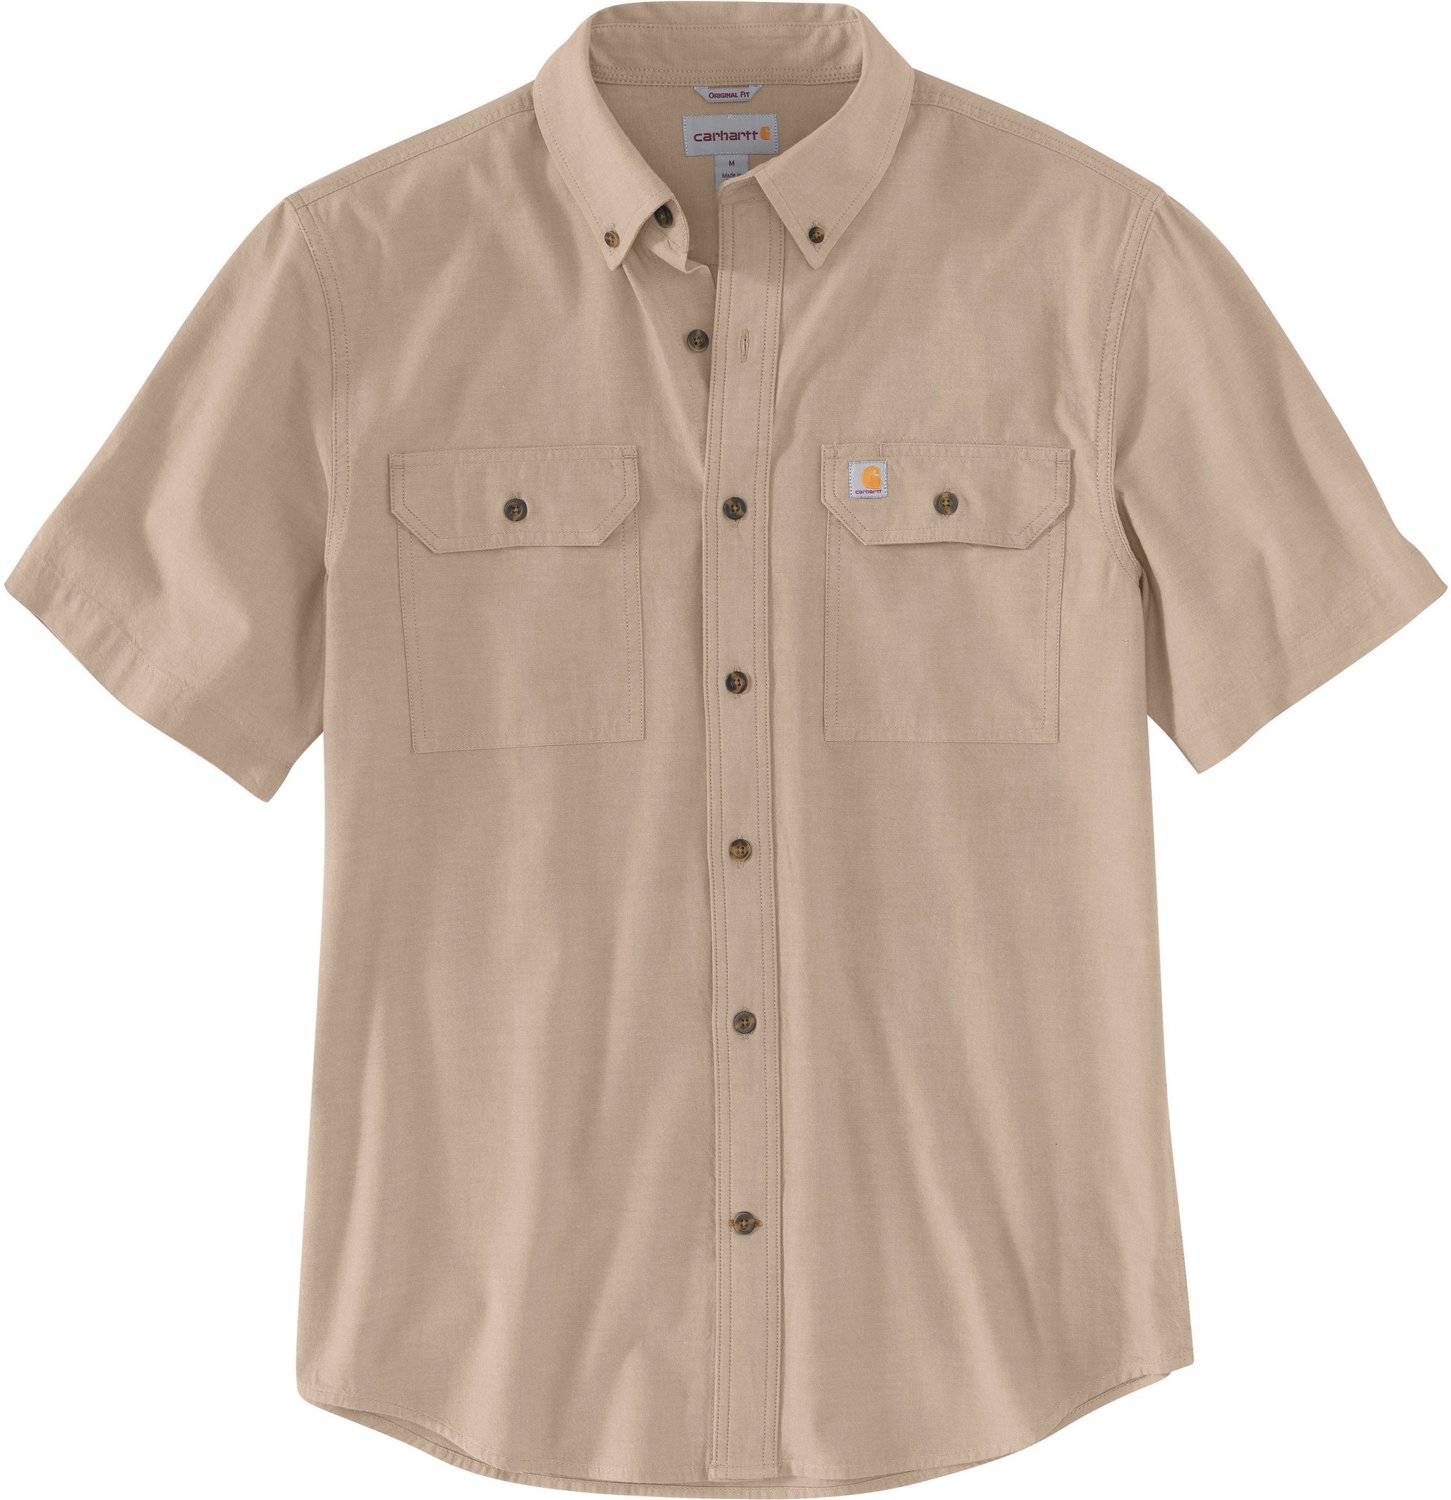 Carhartt Men's TW369 Original Fit Short Sleeve Shirt                                                                             - view number 1 selected